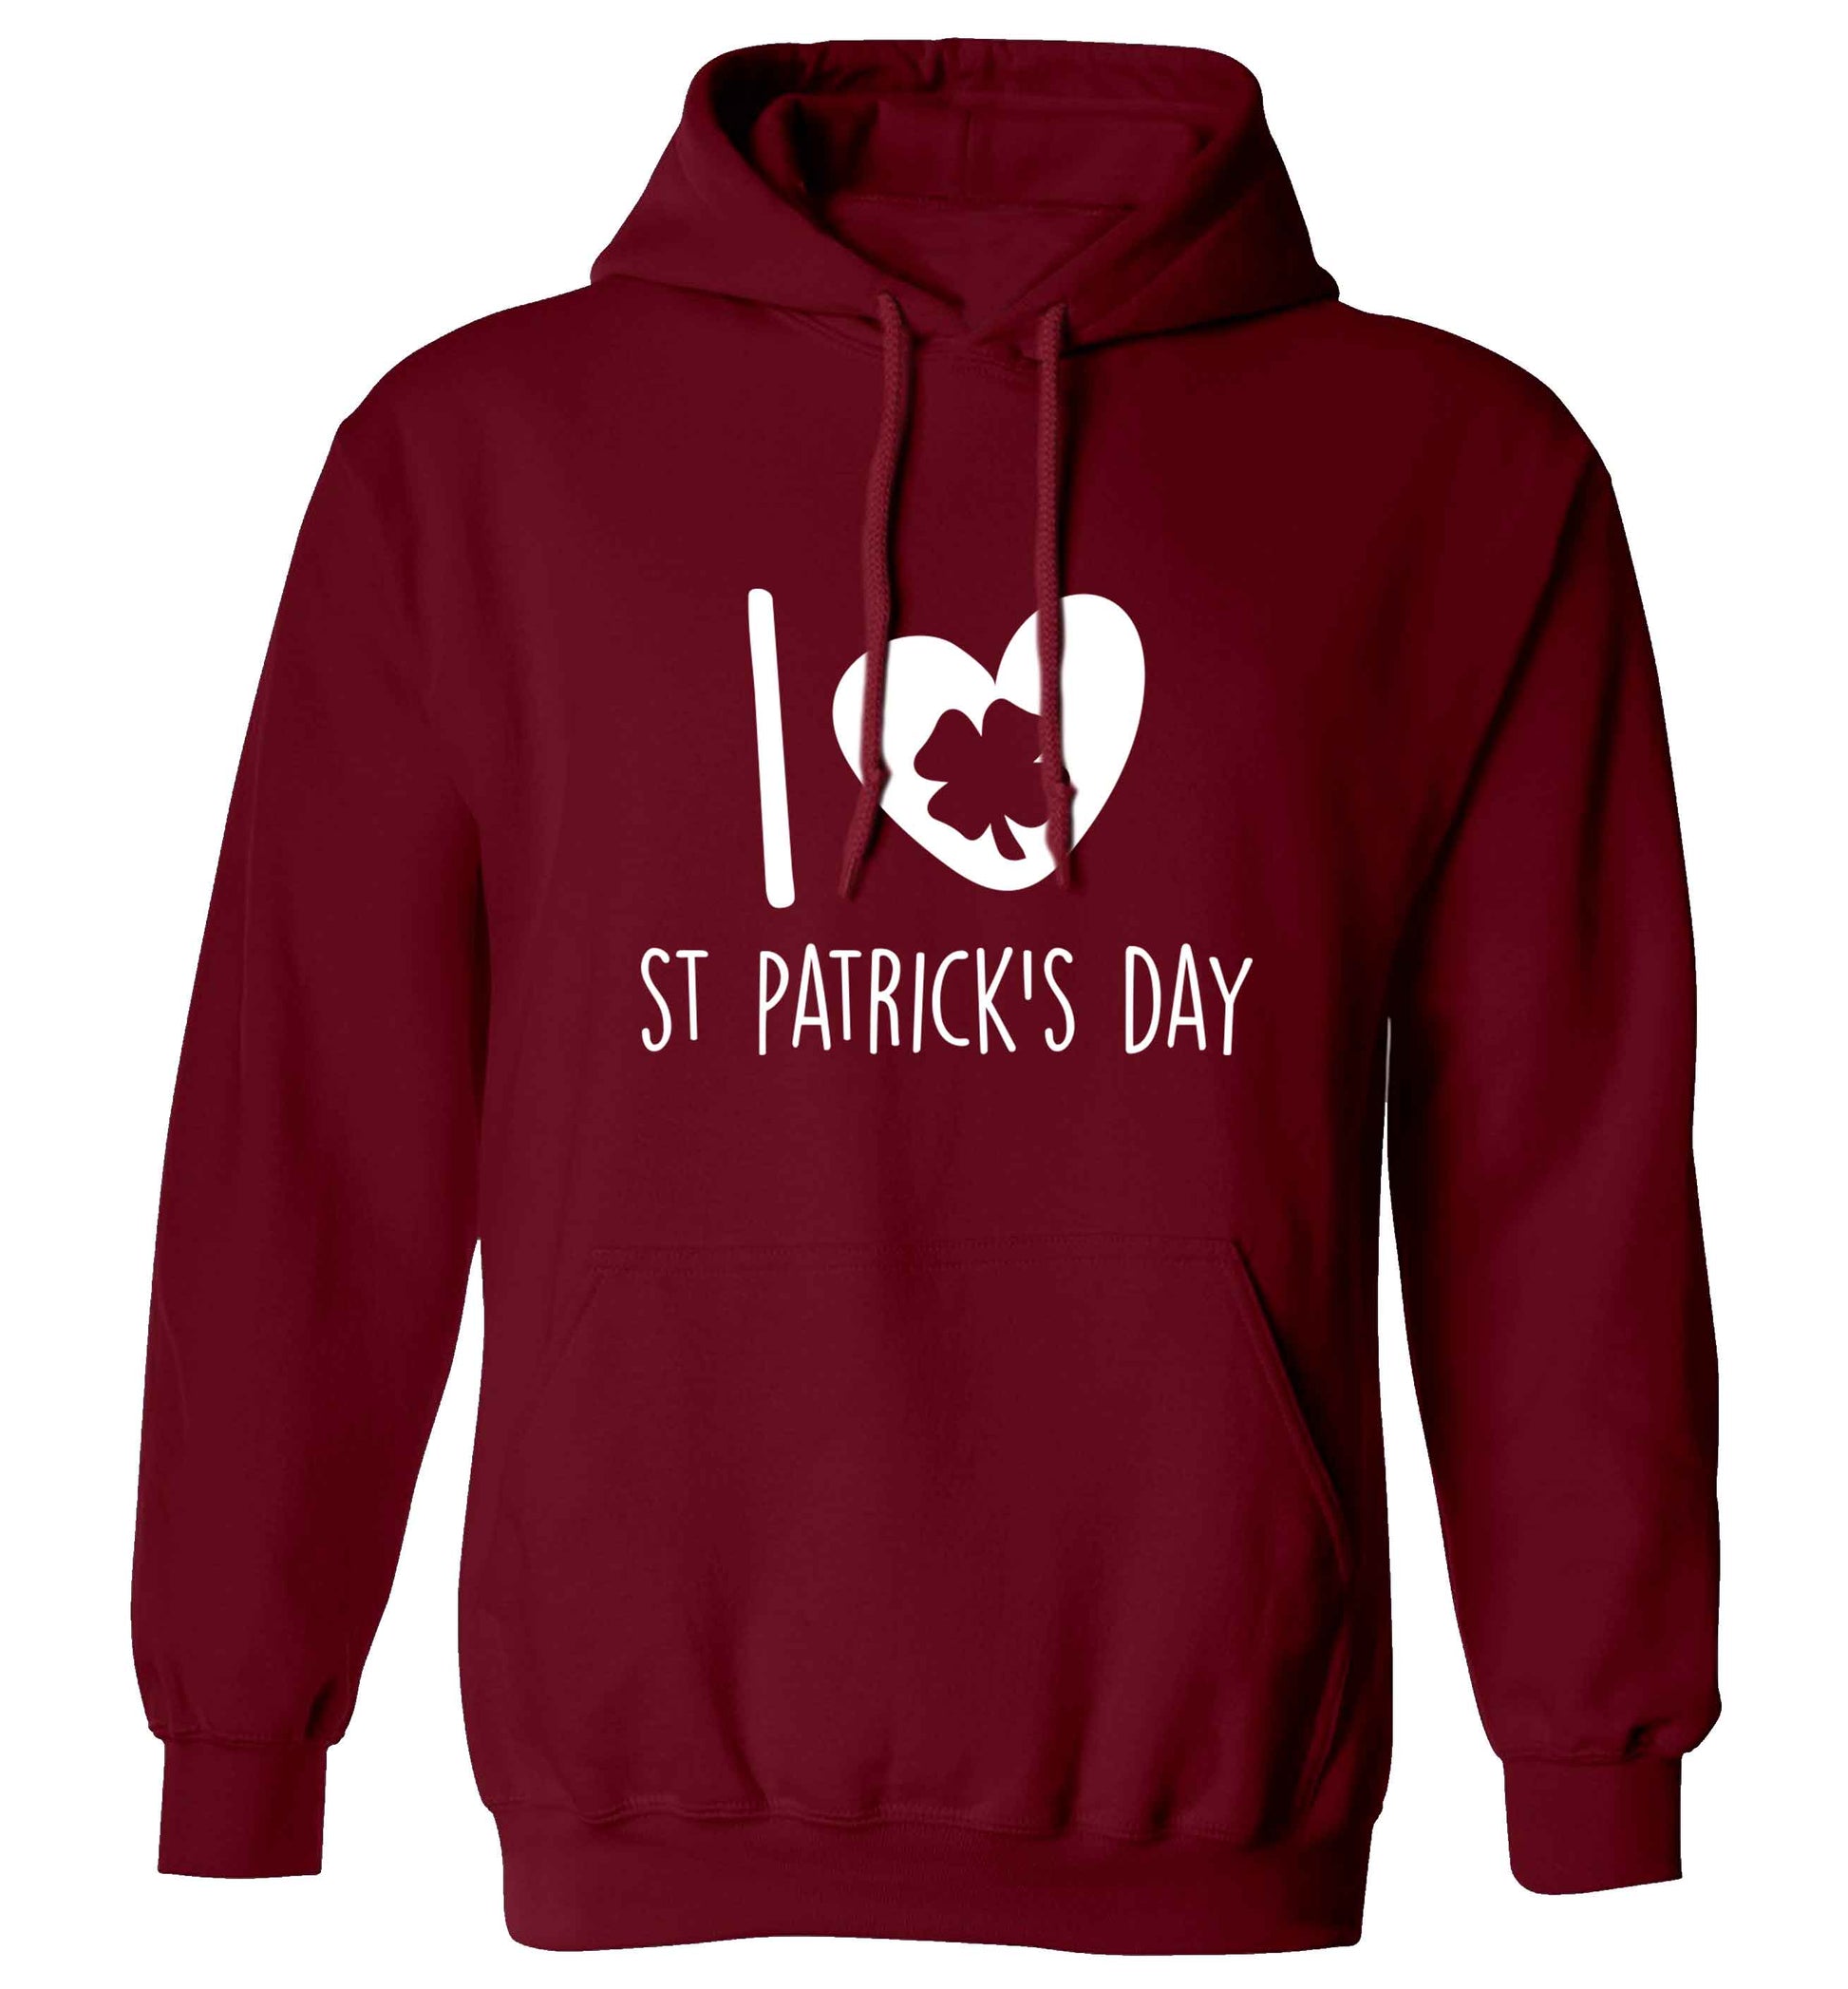 I love St.Patricks day adults unisex maroon hoodie 2XL